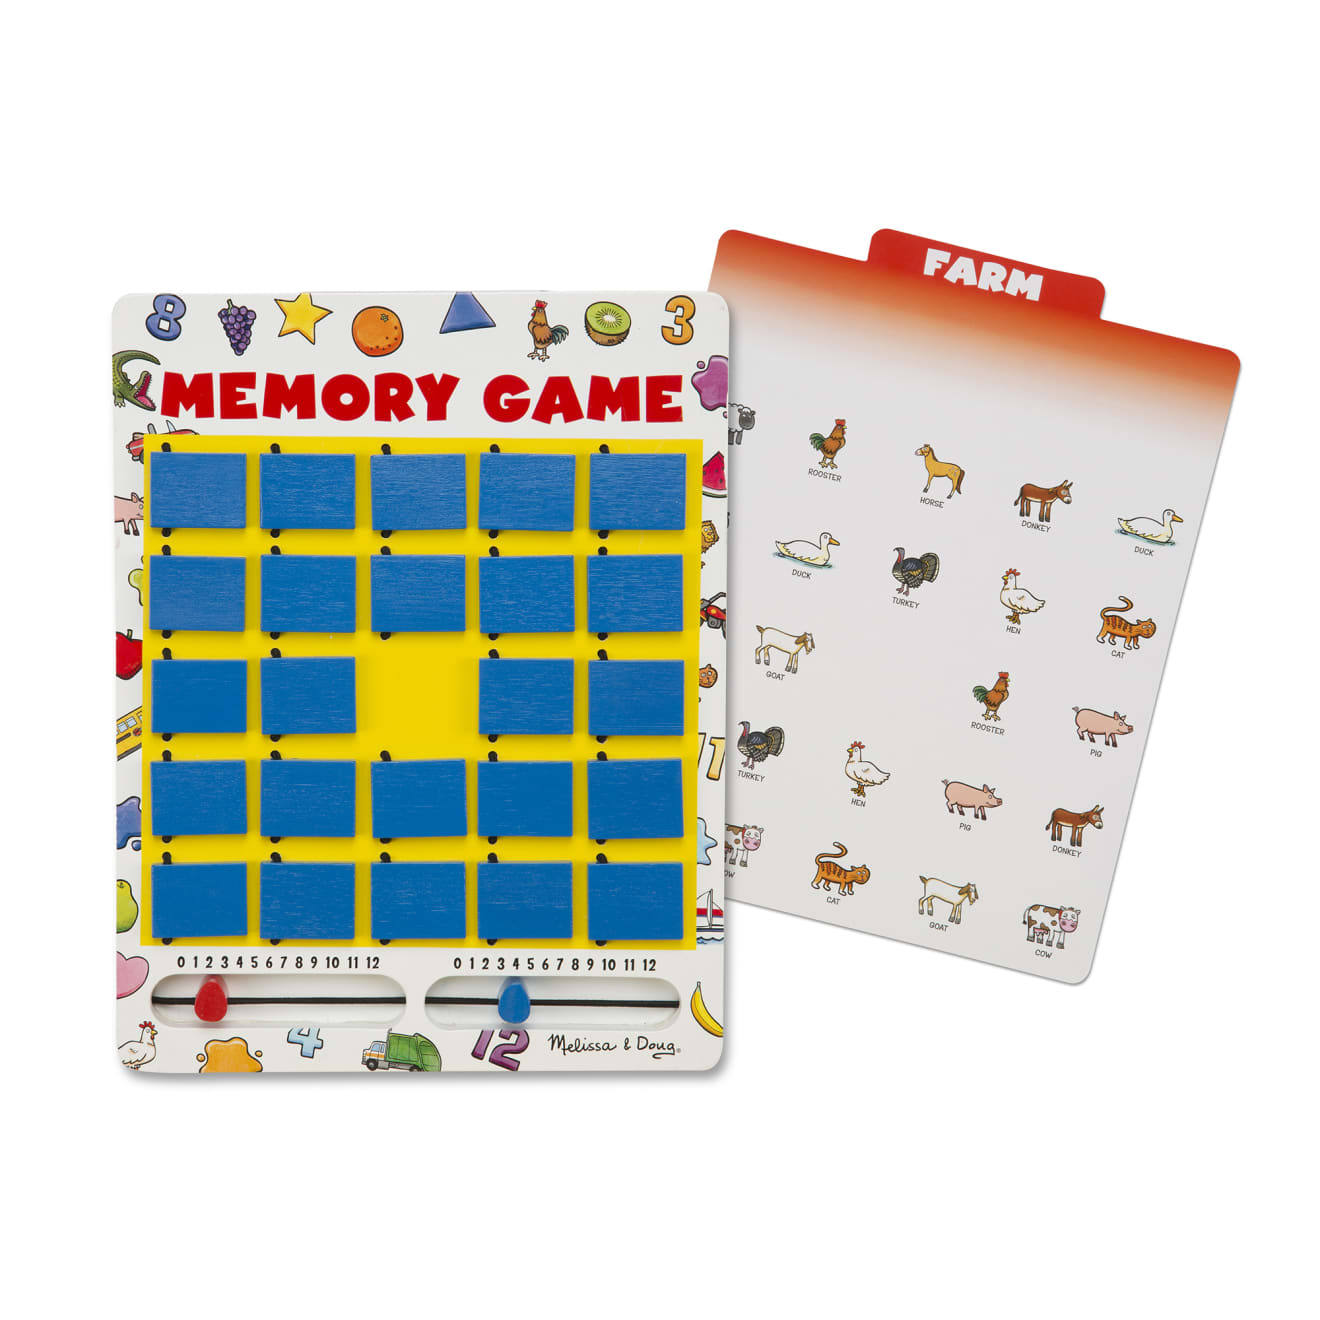 Memo Loto of wood - Memory game for 2 players